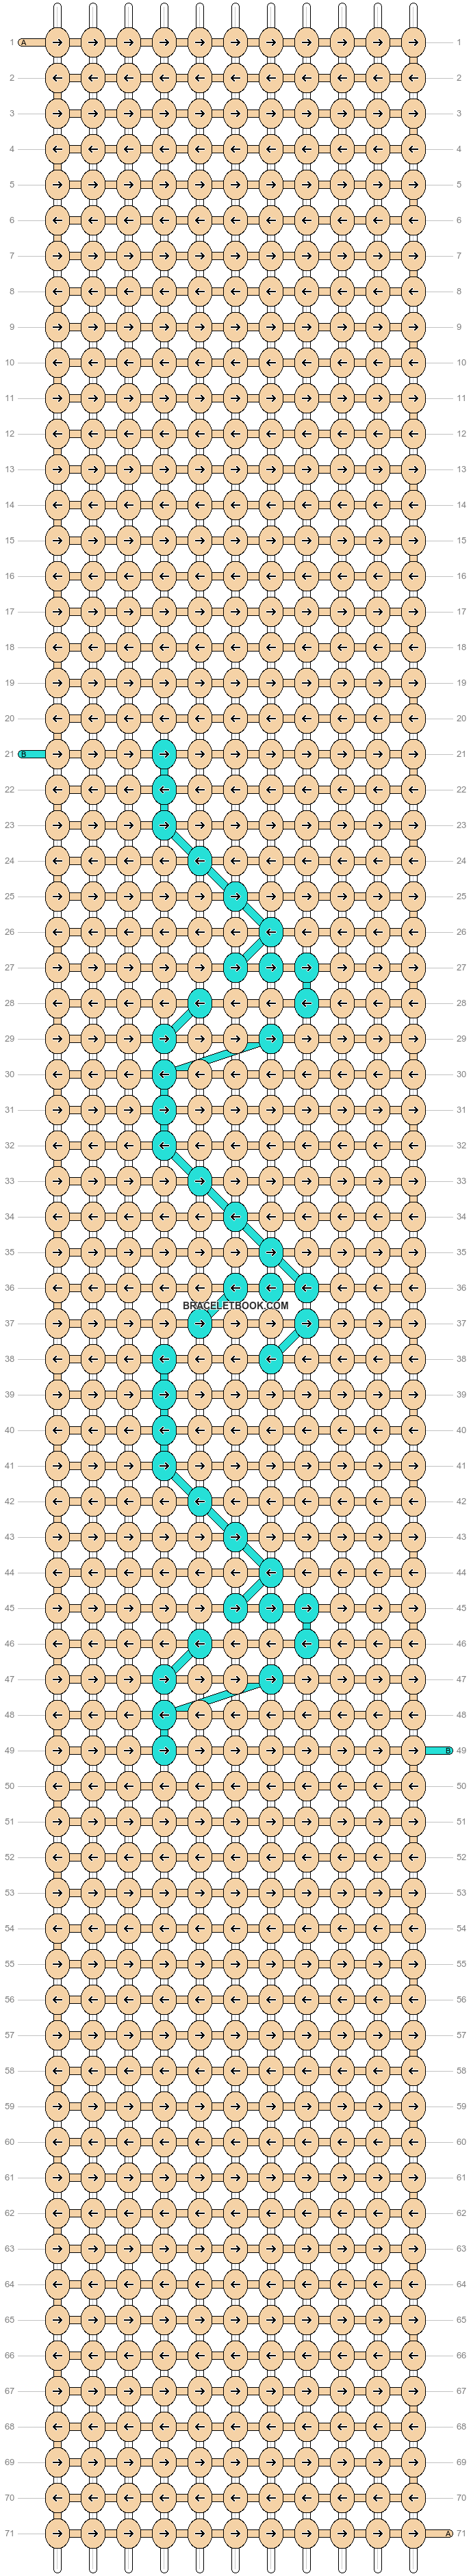 Alpha pattern #38672 variation #46463 pattern